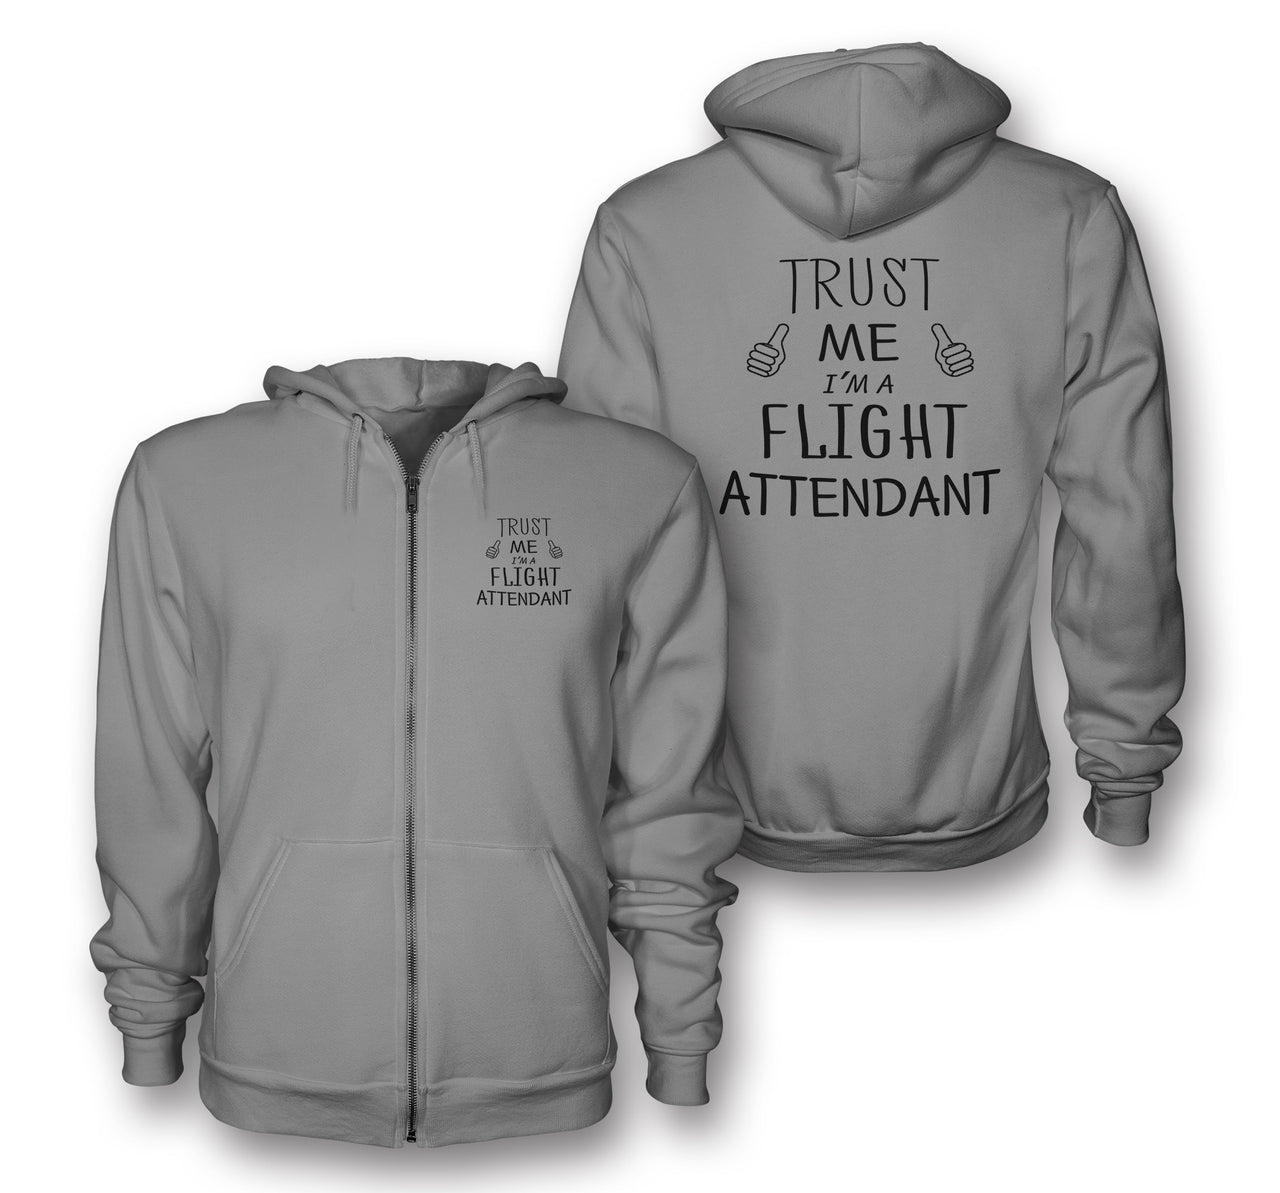 Trust Me I'm a Flight Attendant Designed Zipped Hoodies